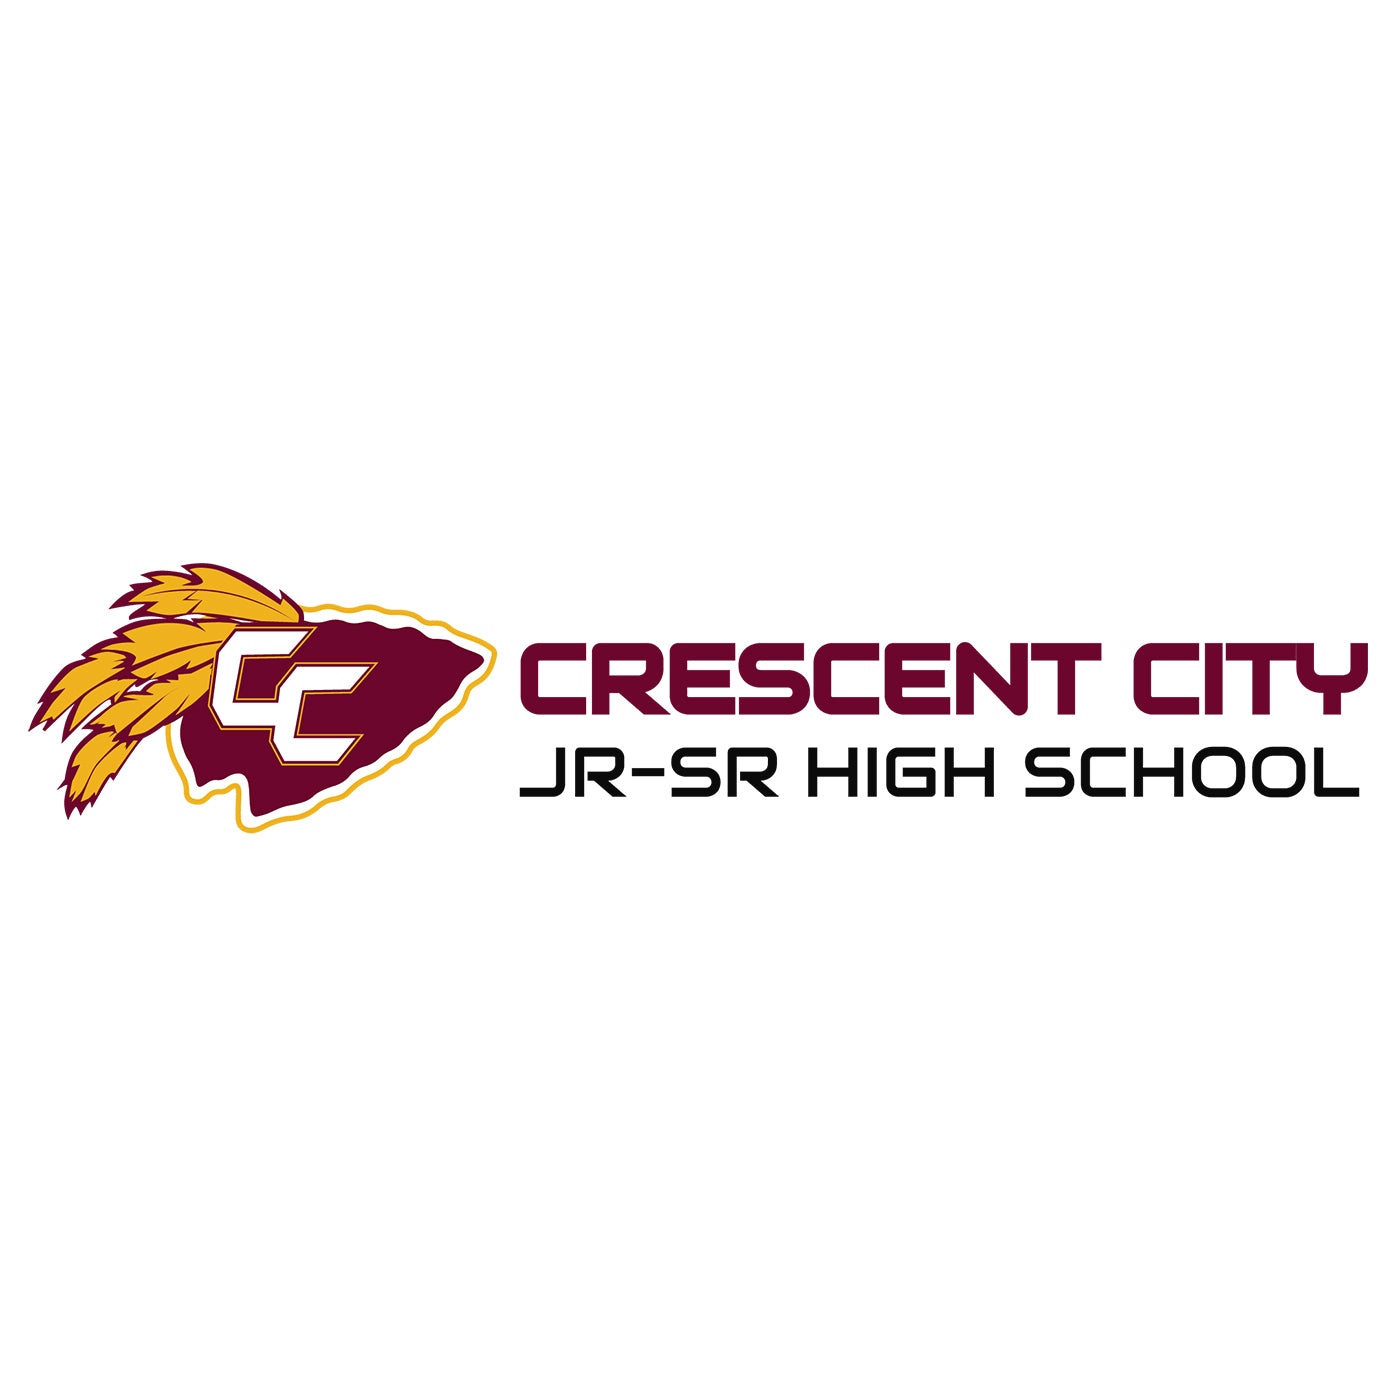 Crescent_City_Junior_Senior_High_School.jpg